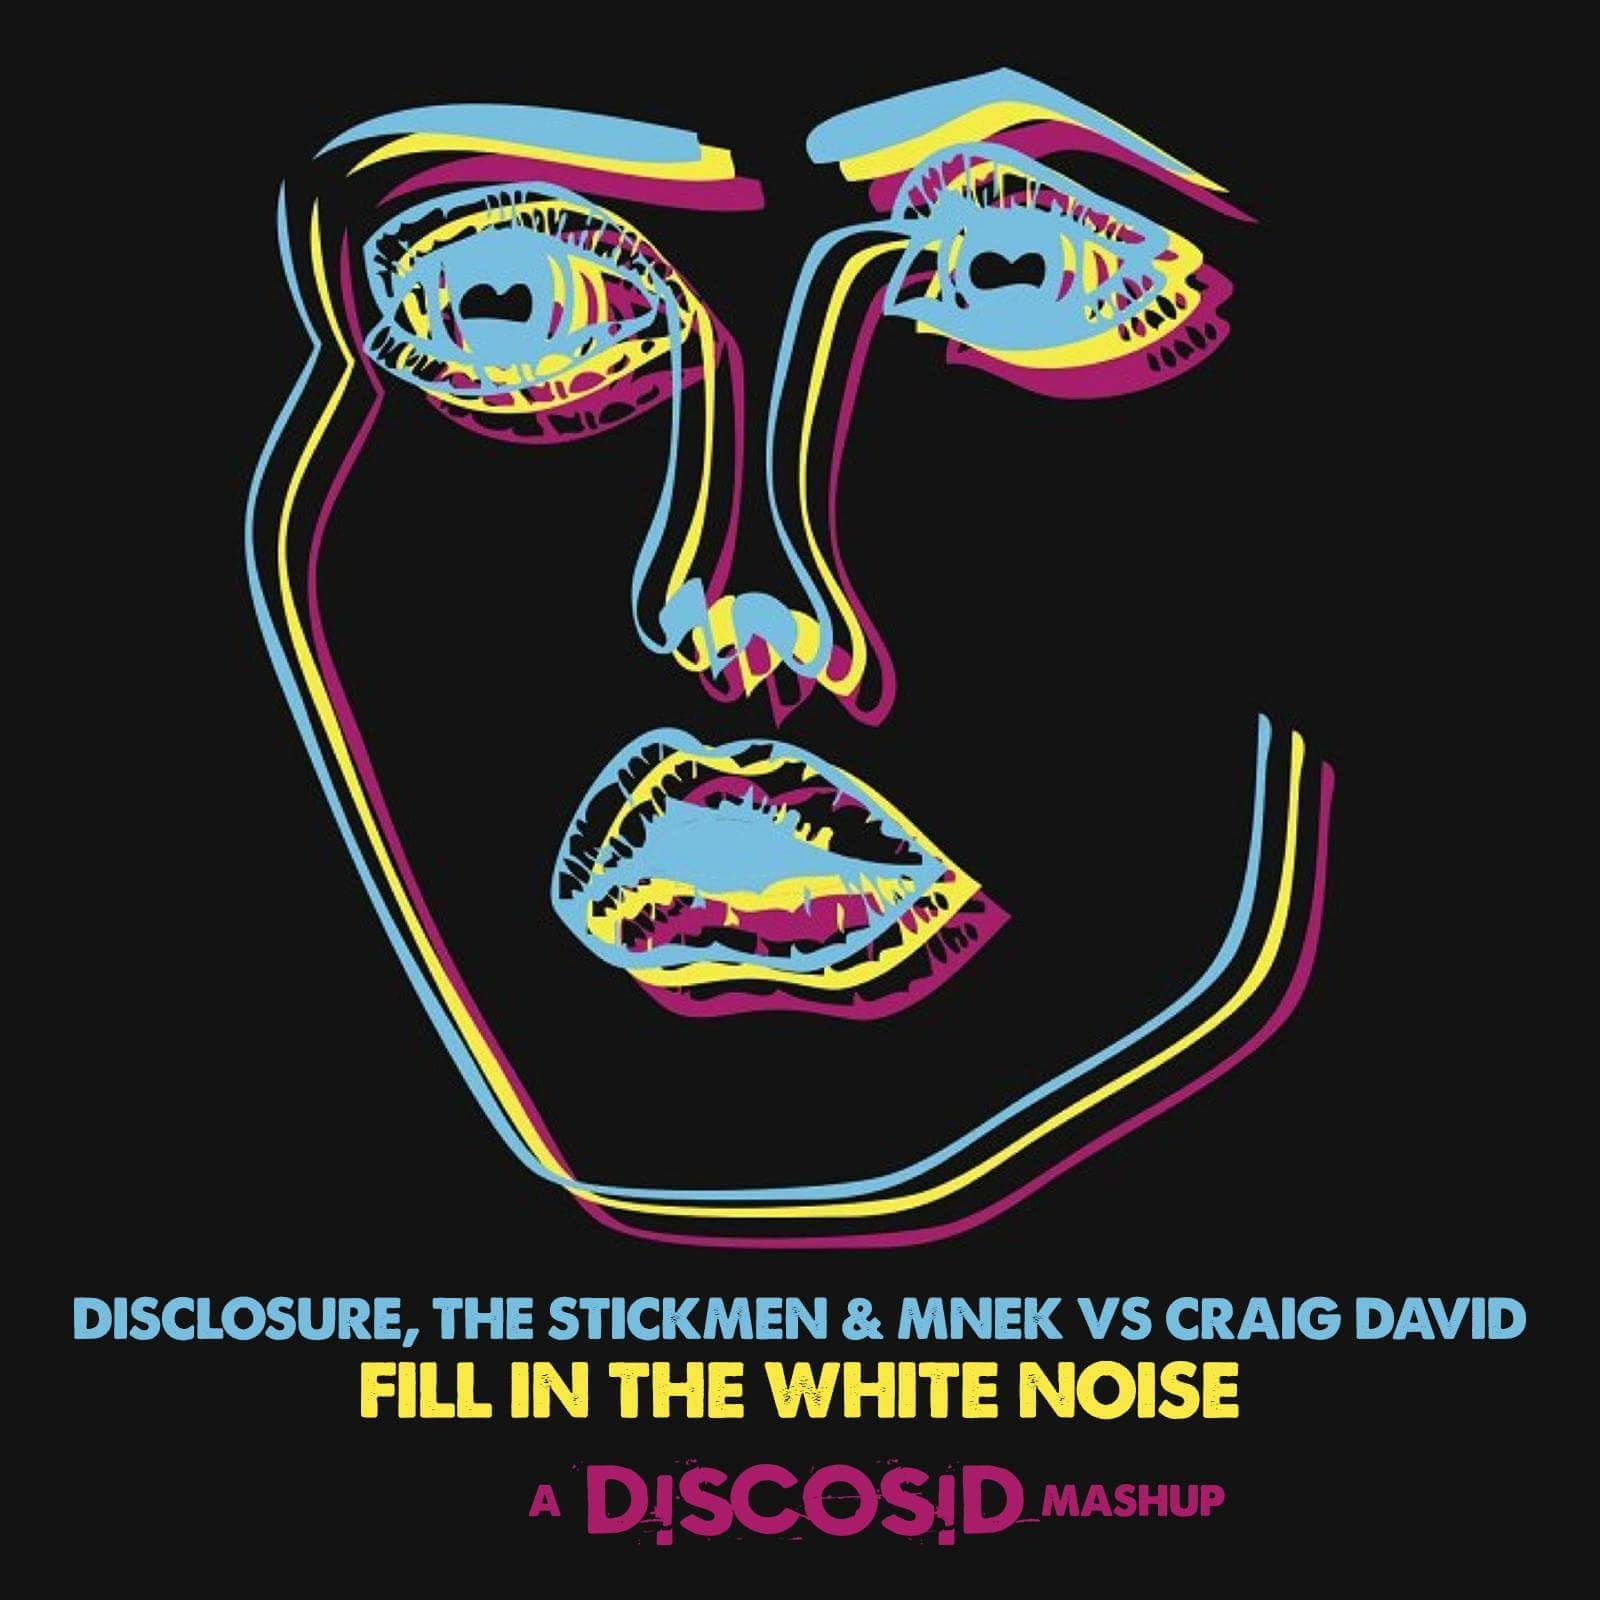 Disclosure, MNEK & The Stickmen vs Craig David - Fill In The White Noise (Discosid Mashup) [VDJ Giles Barr Video Edit]